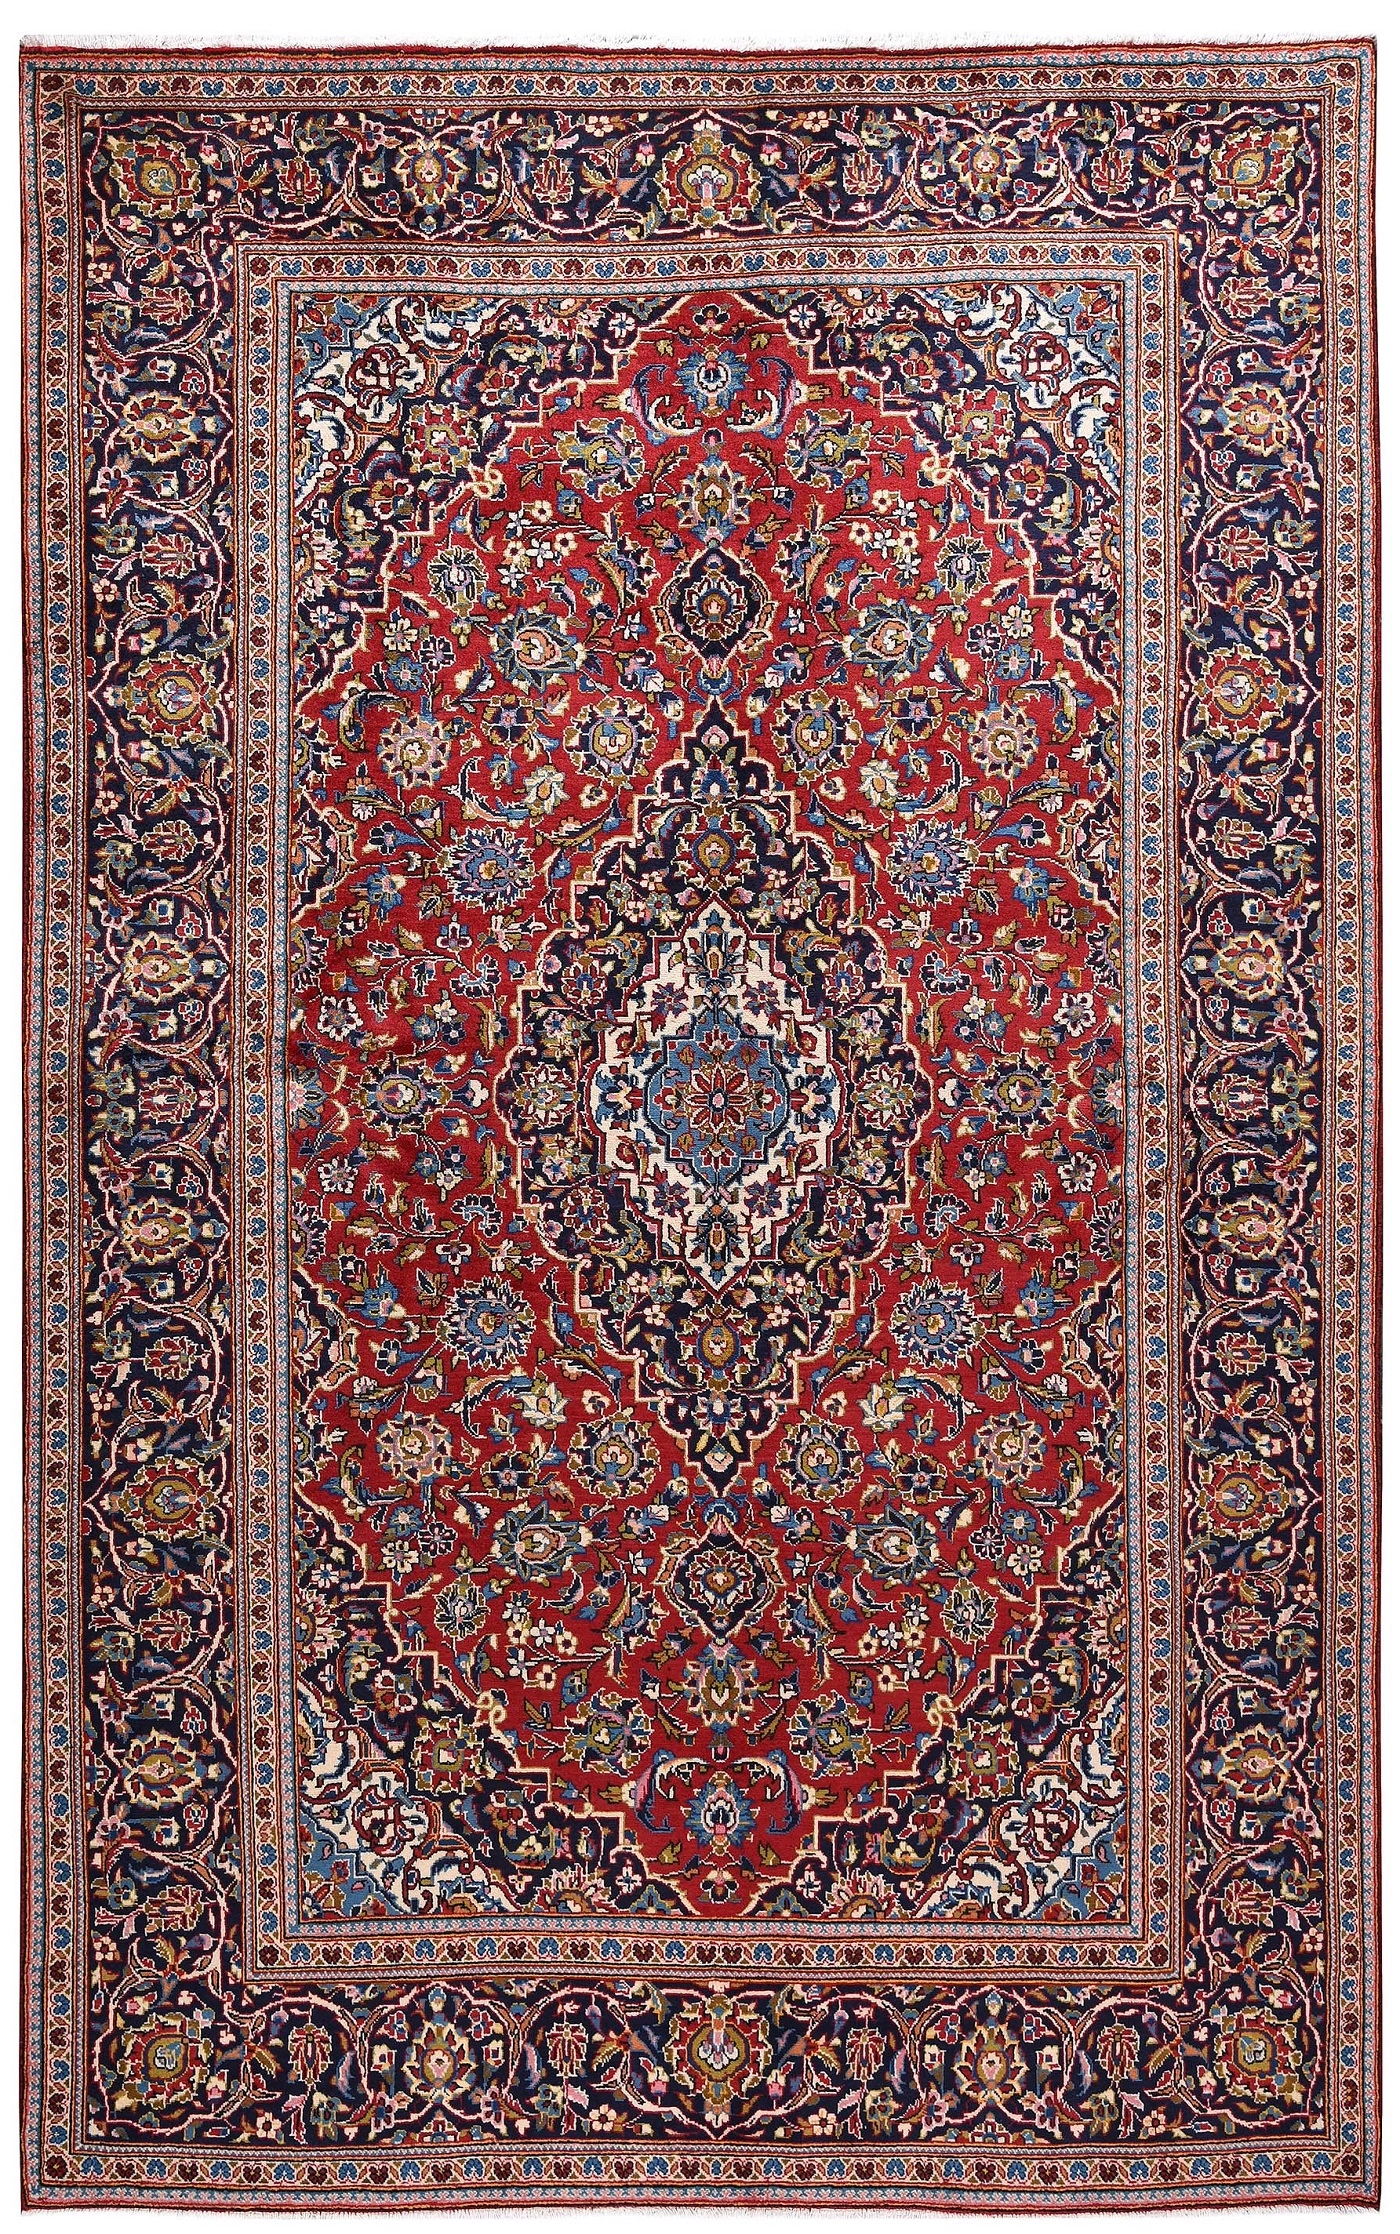 Vintage Persian Rug, Originated from Floral Design ~1996 | CarpetShip